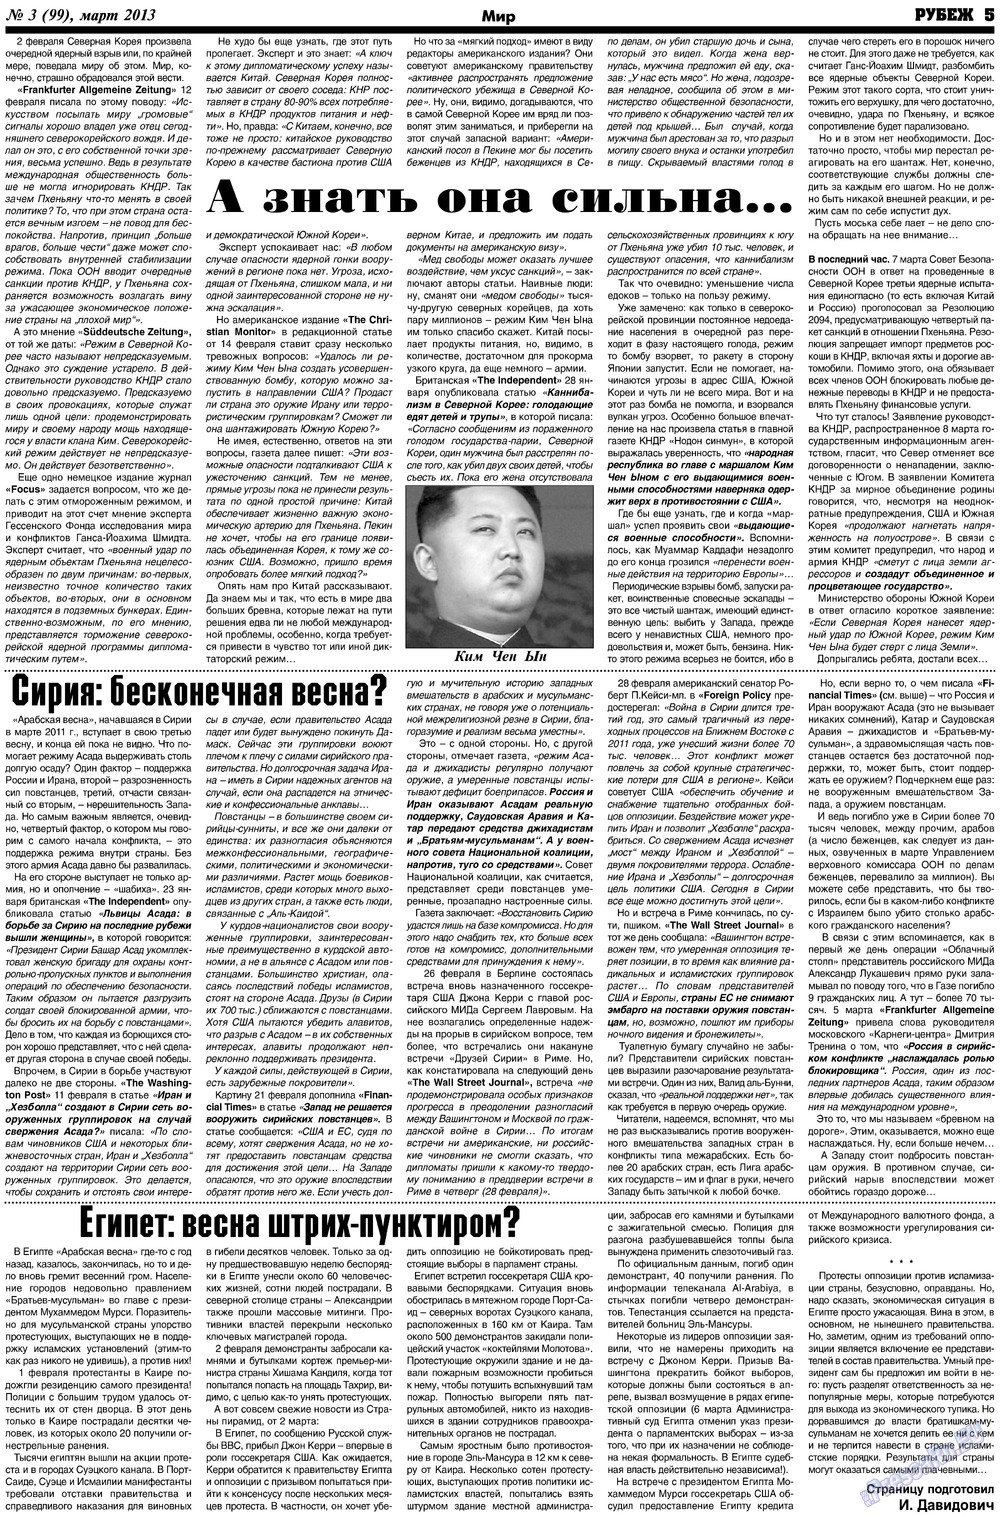 Рубеж, газета. 2013 №3 стр.5